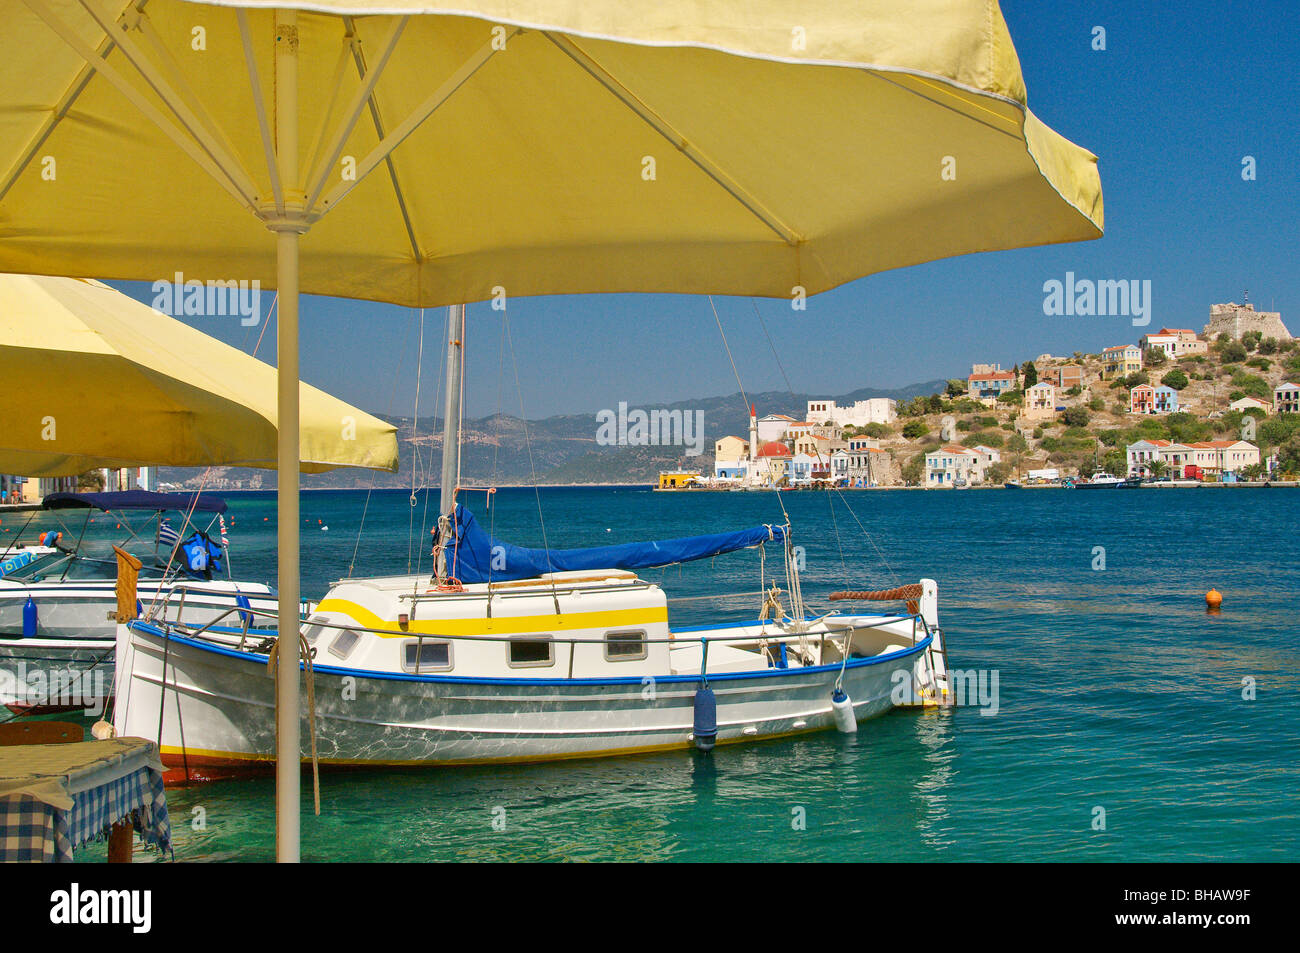 https://c8.alamy.com/comp/BHAW9F/kastellorizo-town-fishing-boat-and-umbrellas-island-of-megisti-dodecanese-BHAW9F.jpg